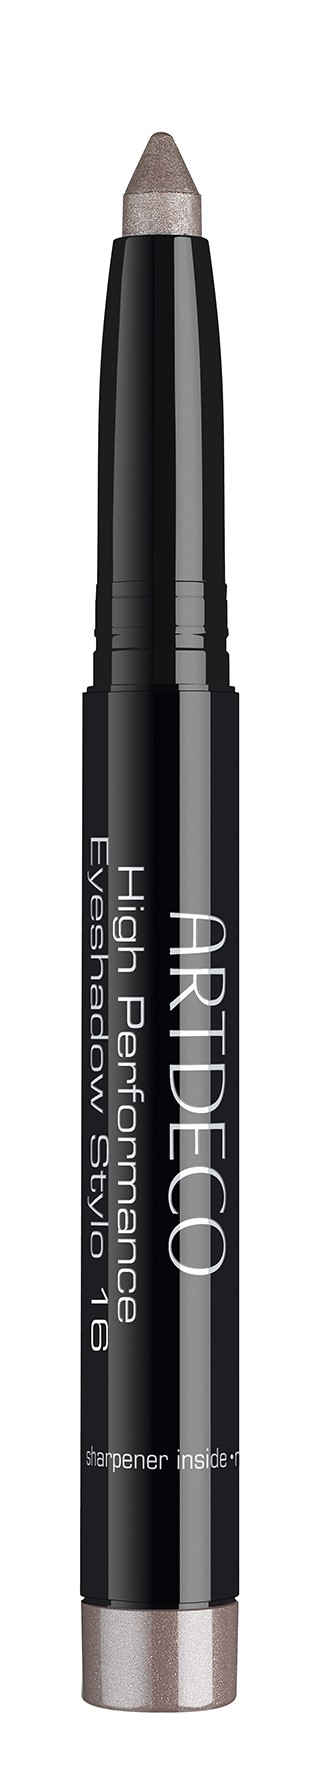 High performance eye shadow stylo #16 Pearl brown 